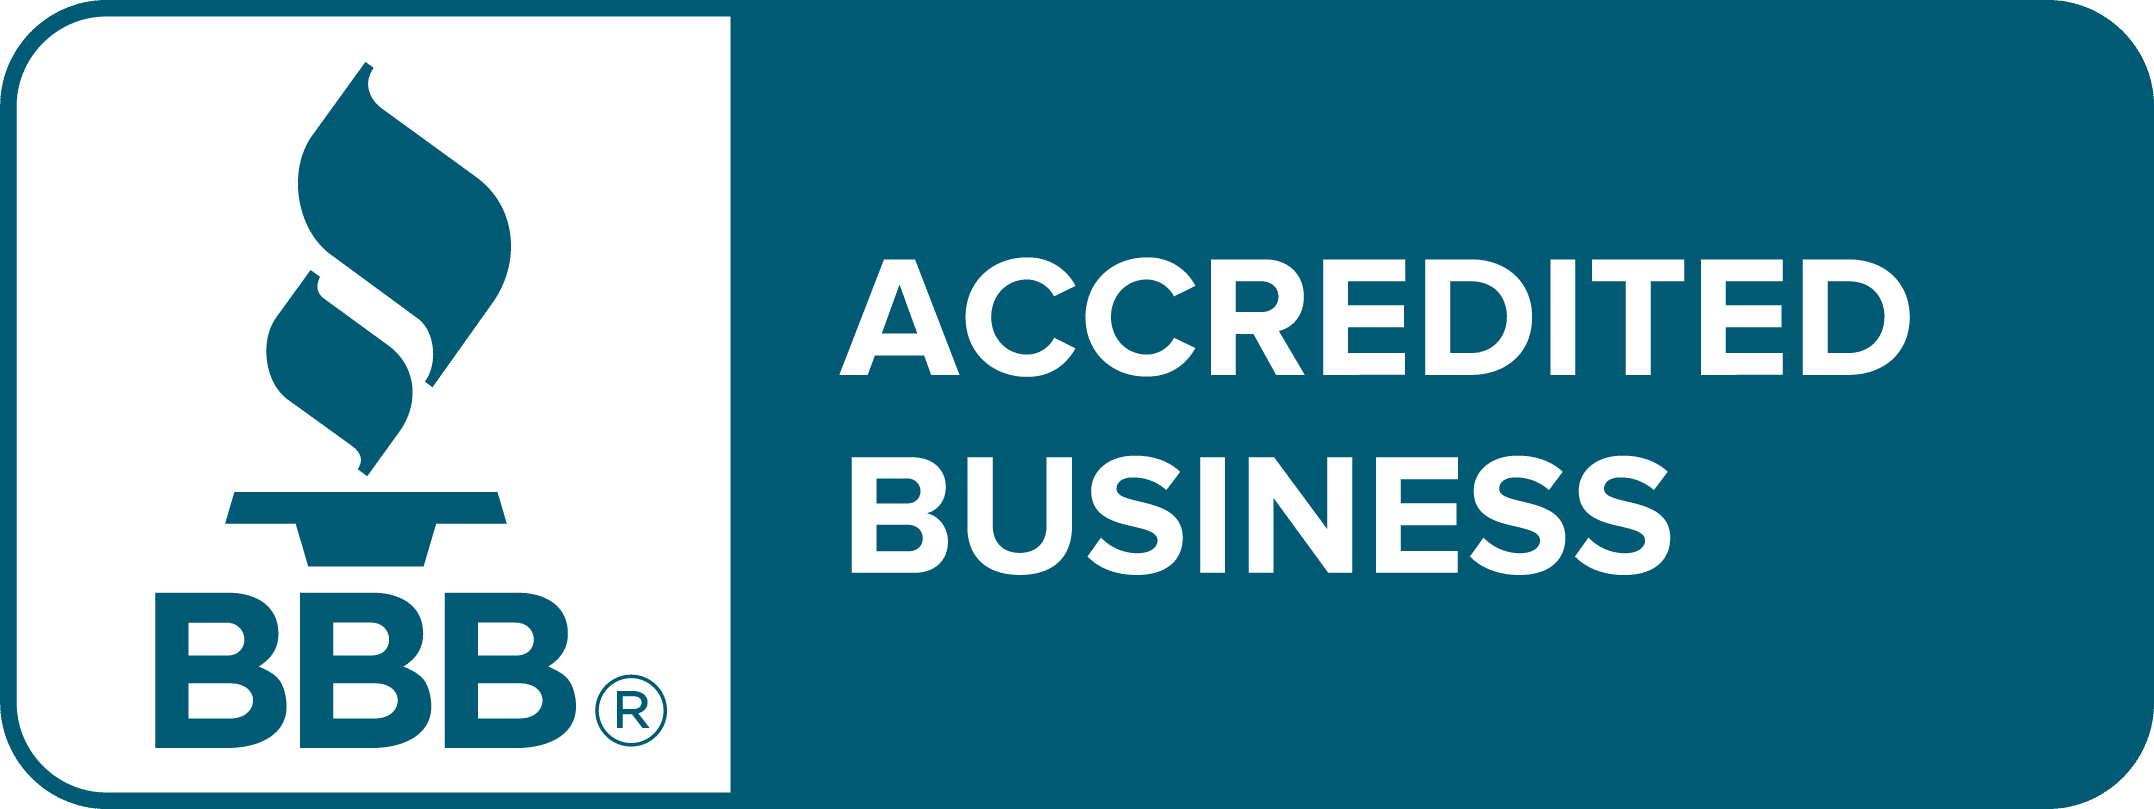 Better Business Bureau Accreditation Seal